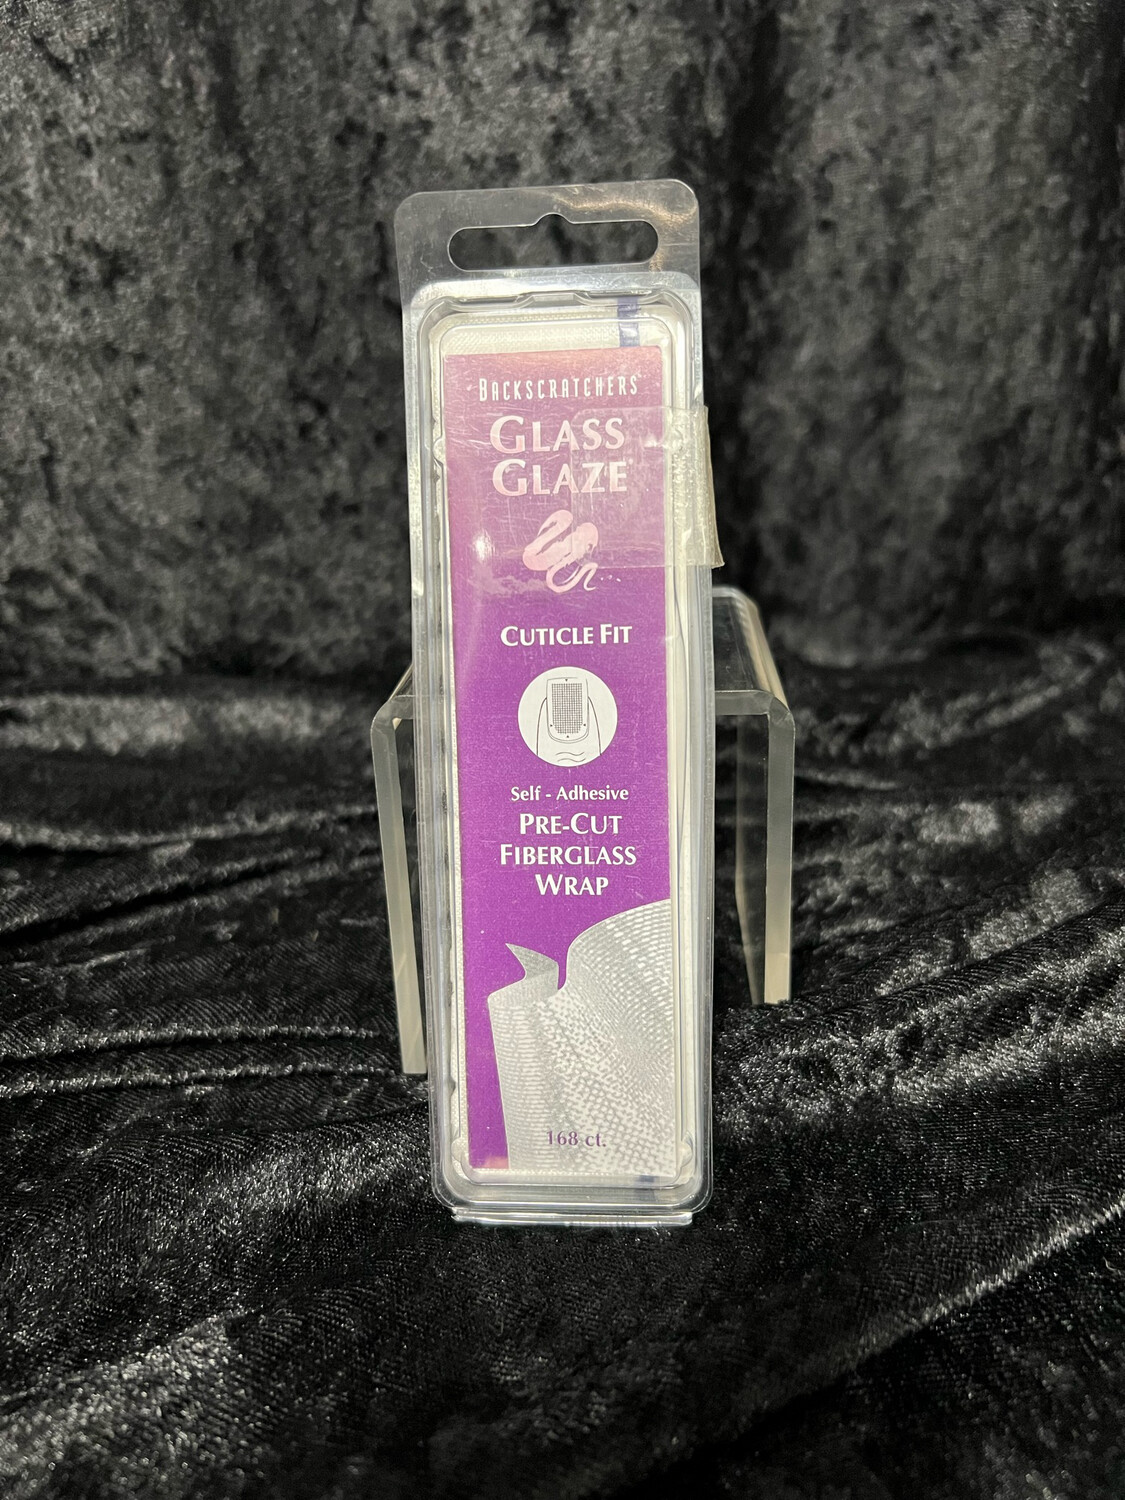 BS Glass Glaze Fiberglass Wrap 12ct